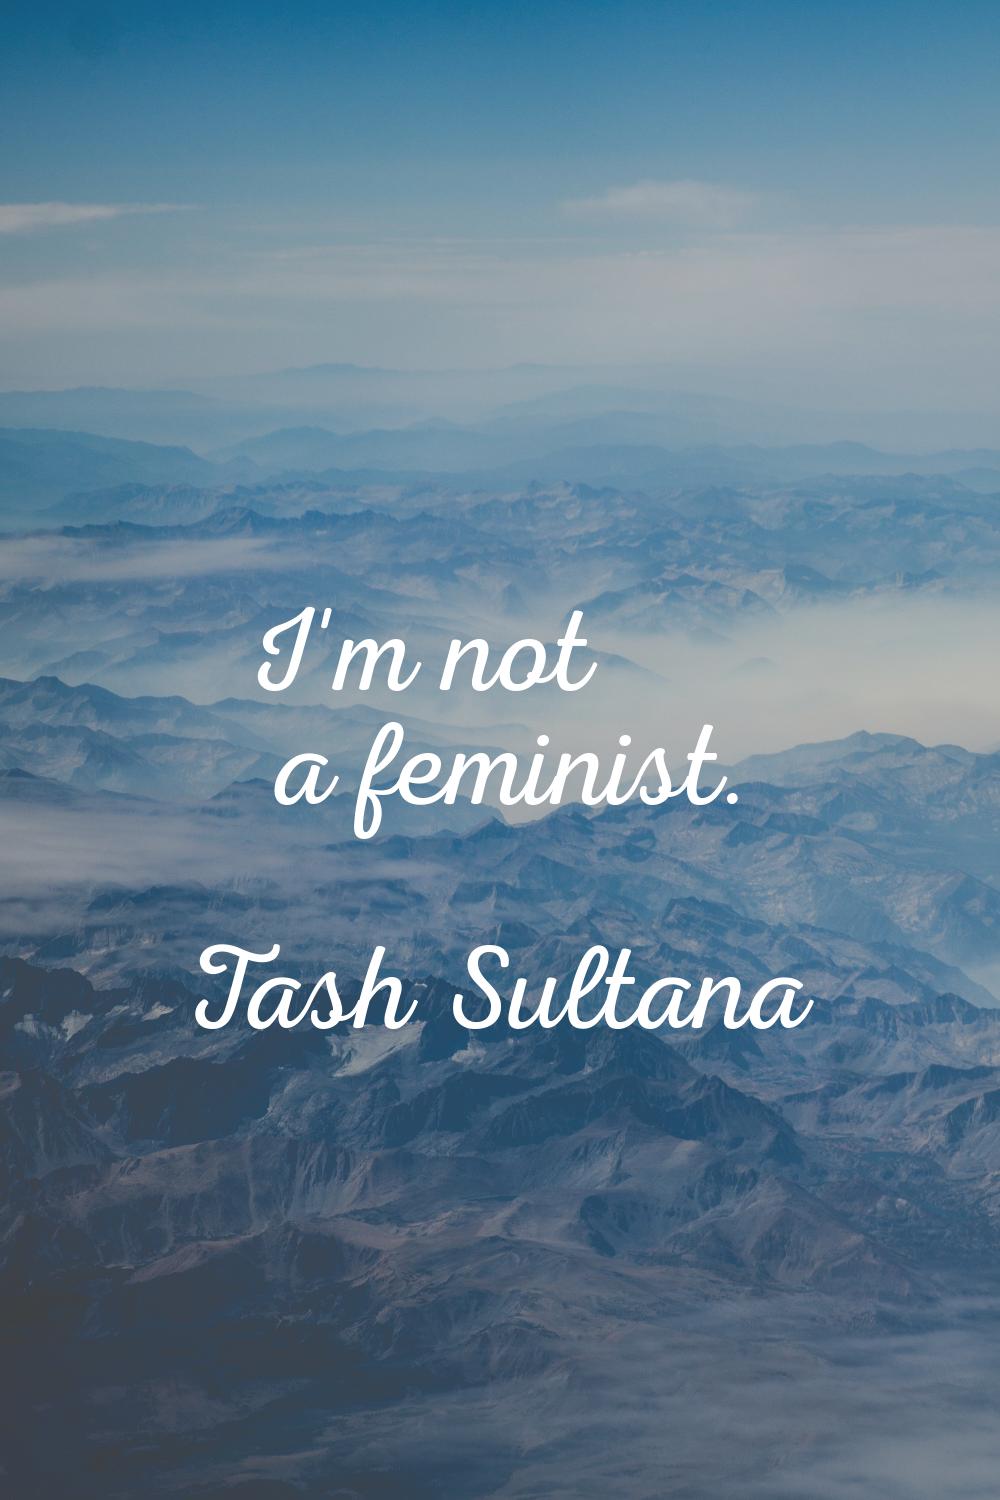 I'm not a feminist.